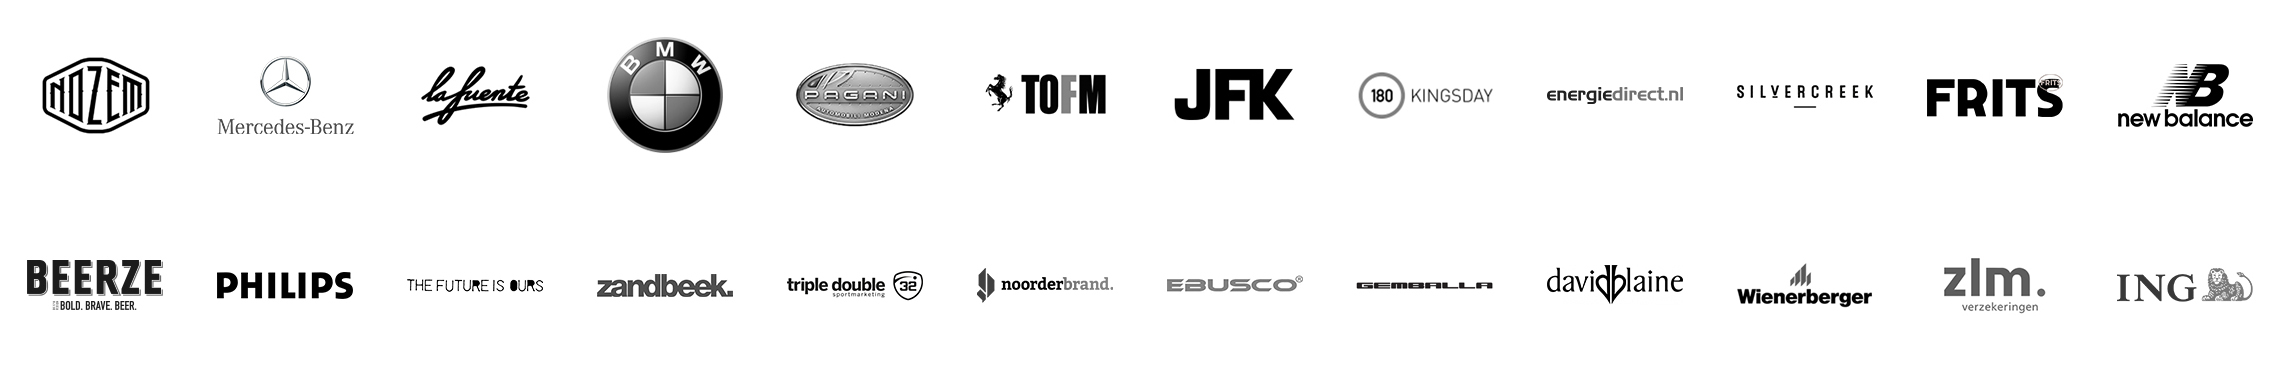 client-logos-grid-3